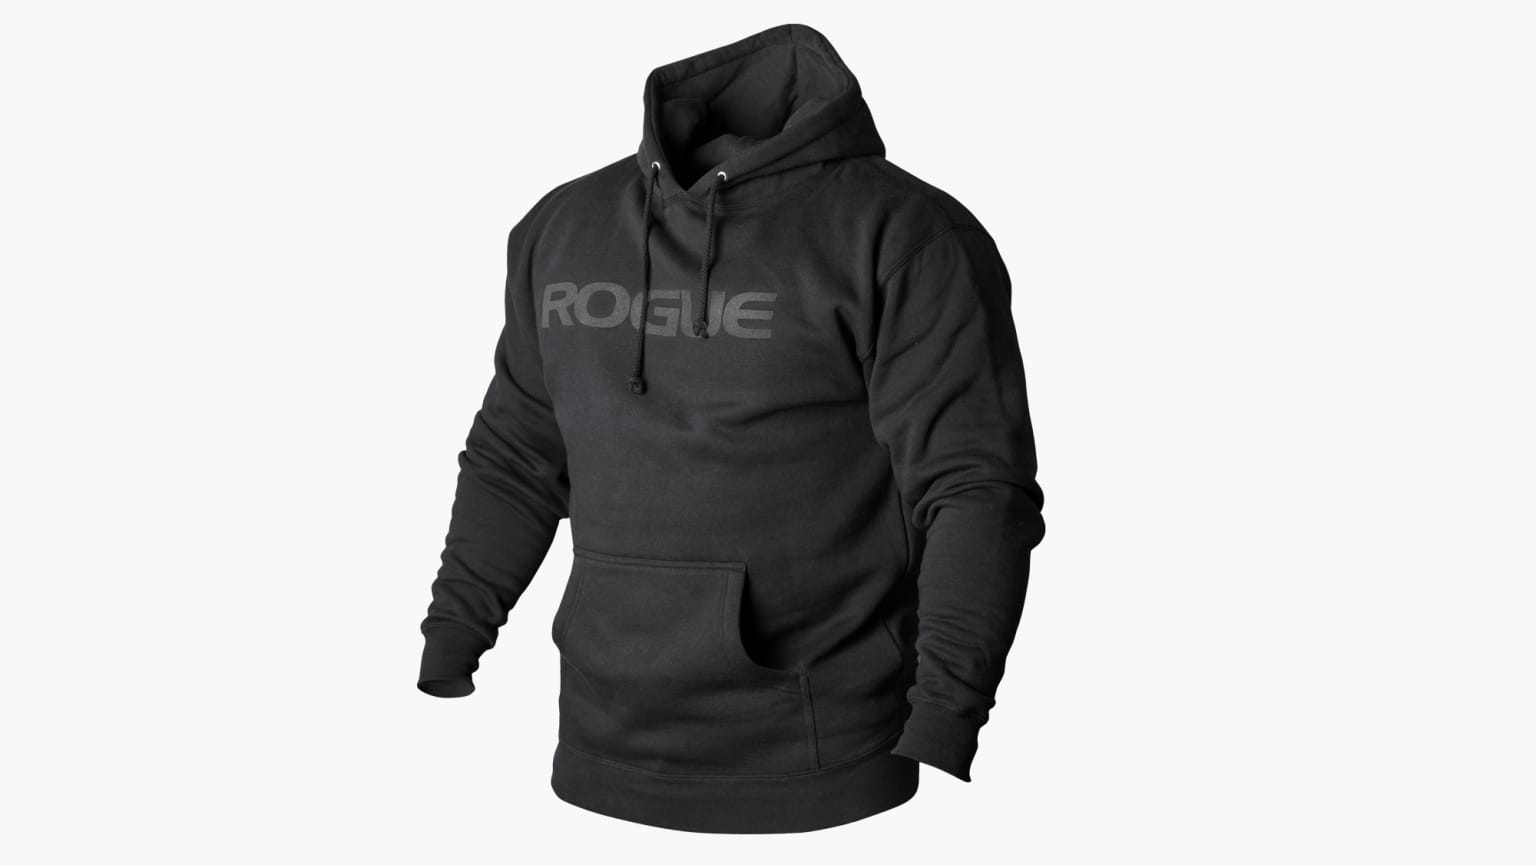 Rogue Basic Hoodie - Black w/ Black Text